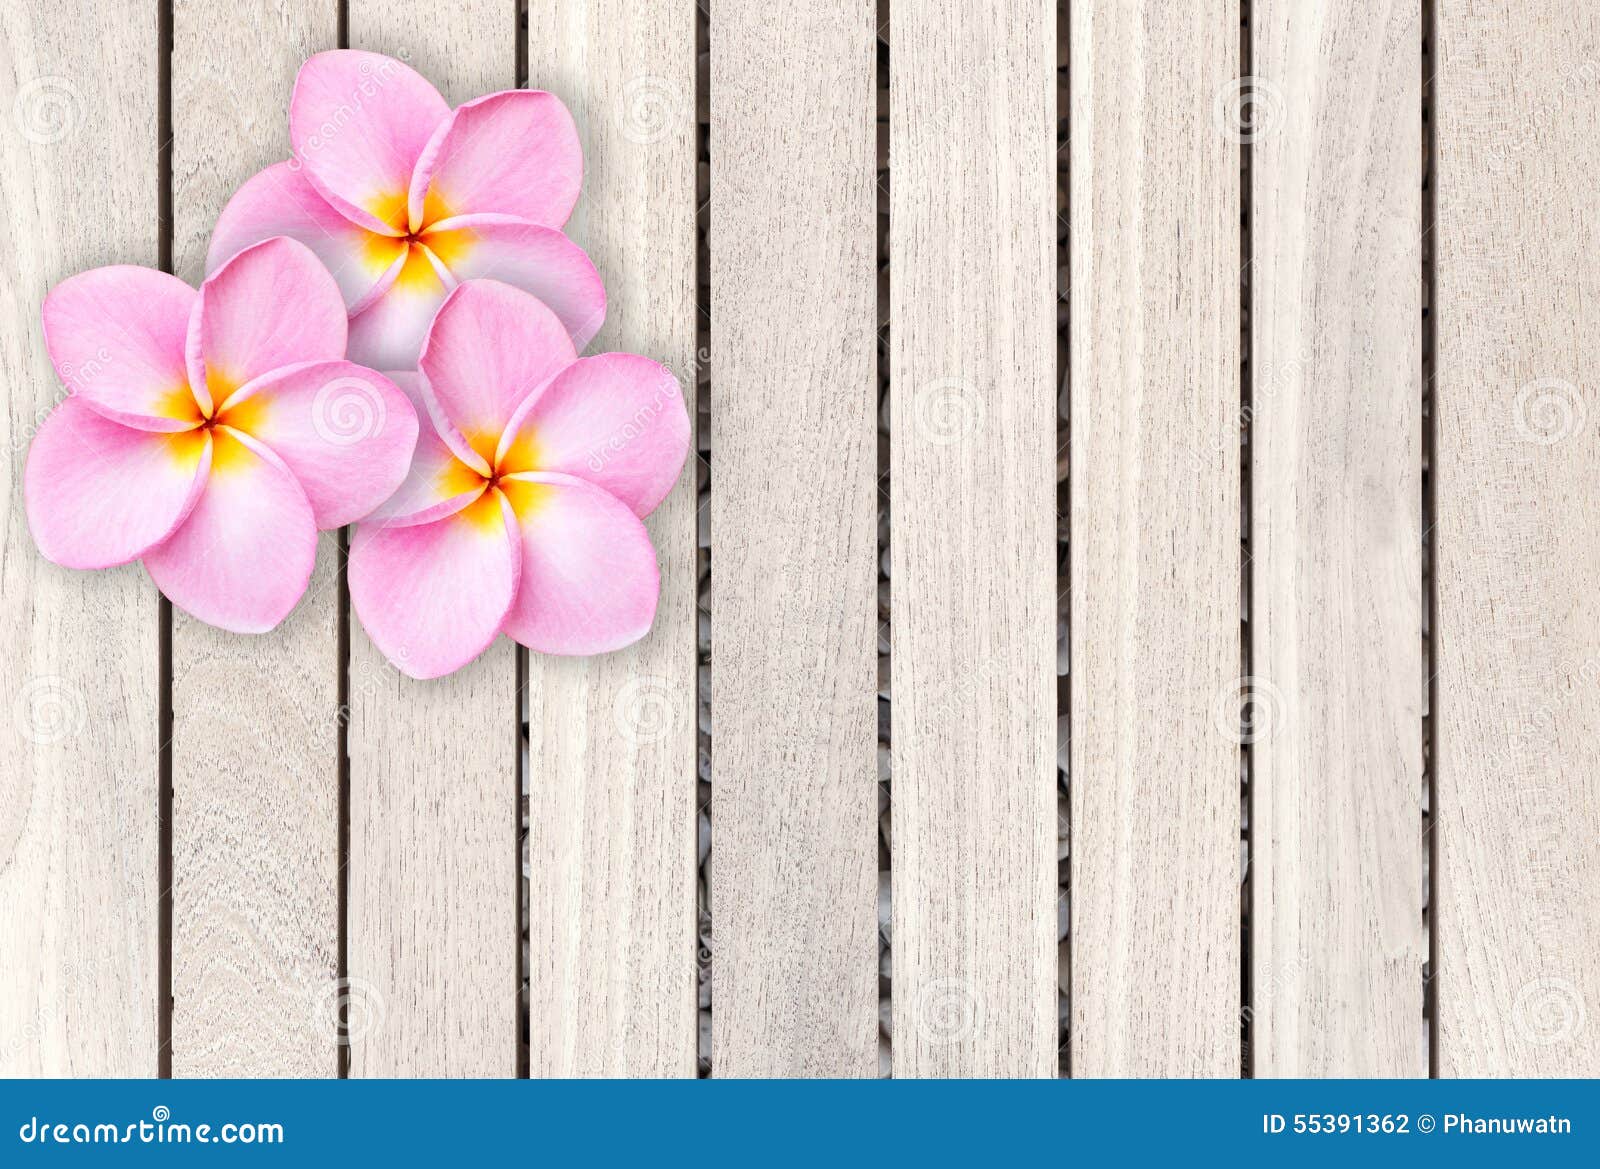 107,152 Pink Grey Background Stock Photos - Free & Royalty-Free